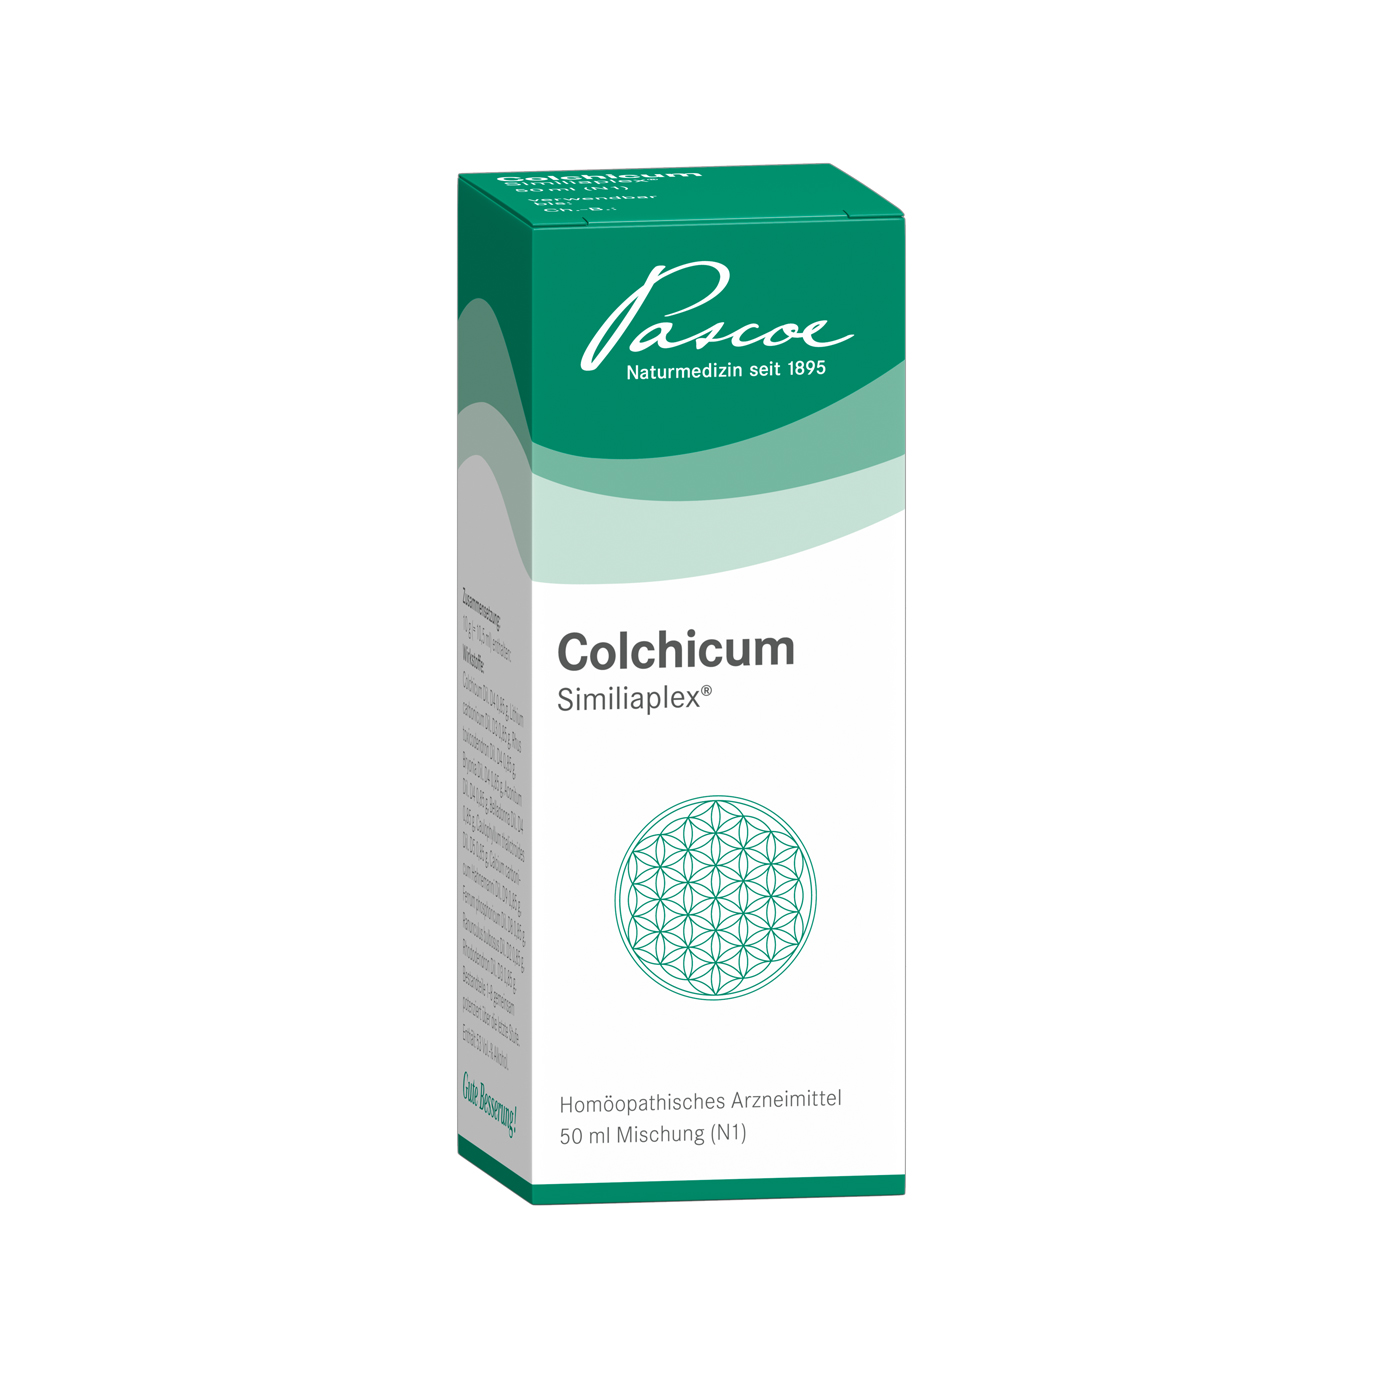 Colchicum Similiaplex 50 ml Packshot PZN 01351865